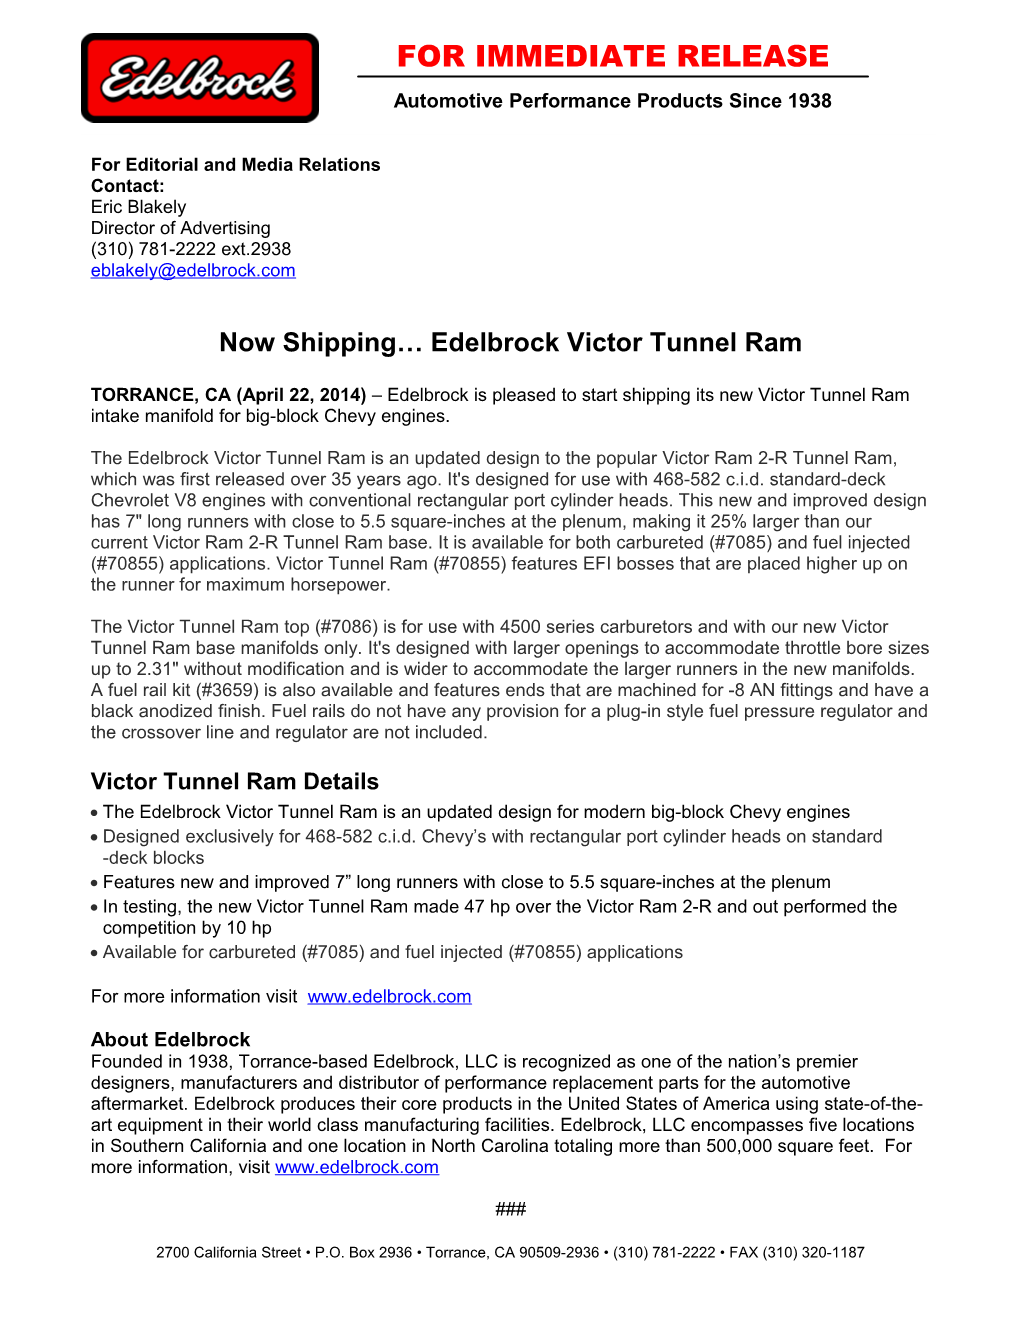 Now Shipping Edelbrock Victor Tunnel Ram